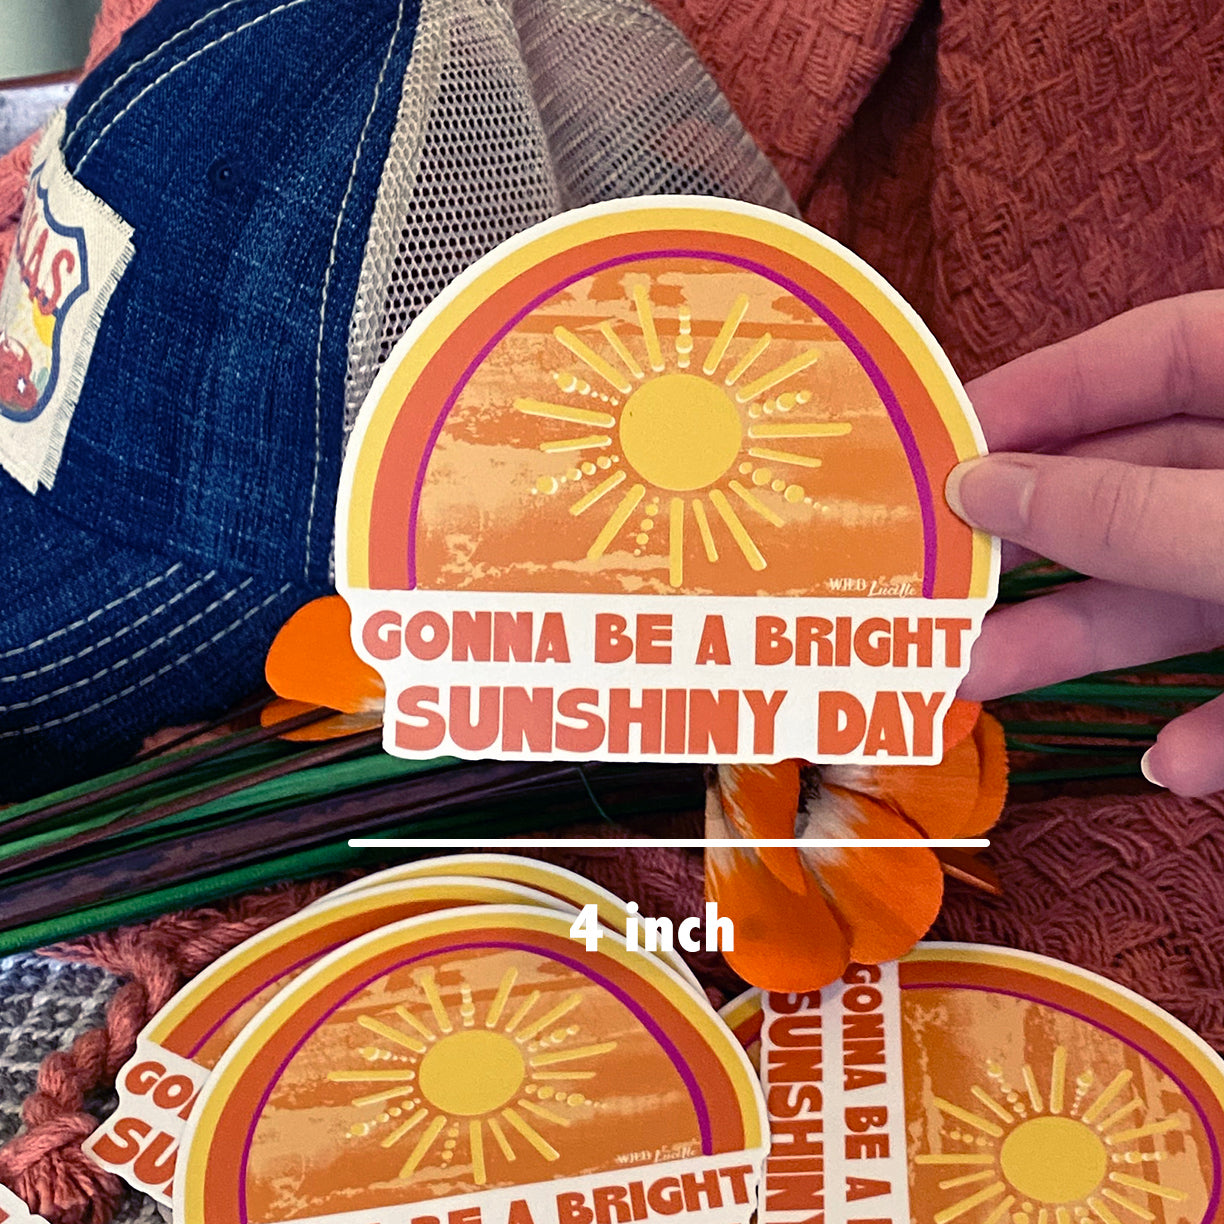 Gonna Be A Bright Sunshiny Day - 4 Inch Vinyl Sticker Decals